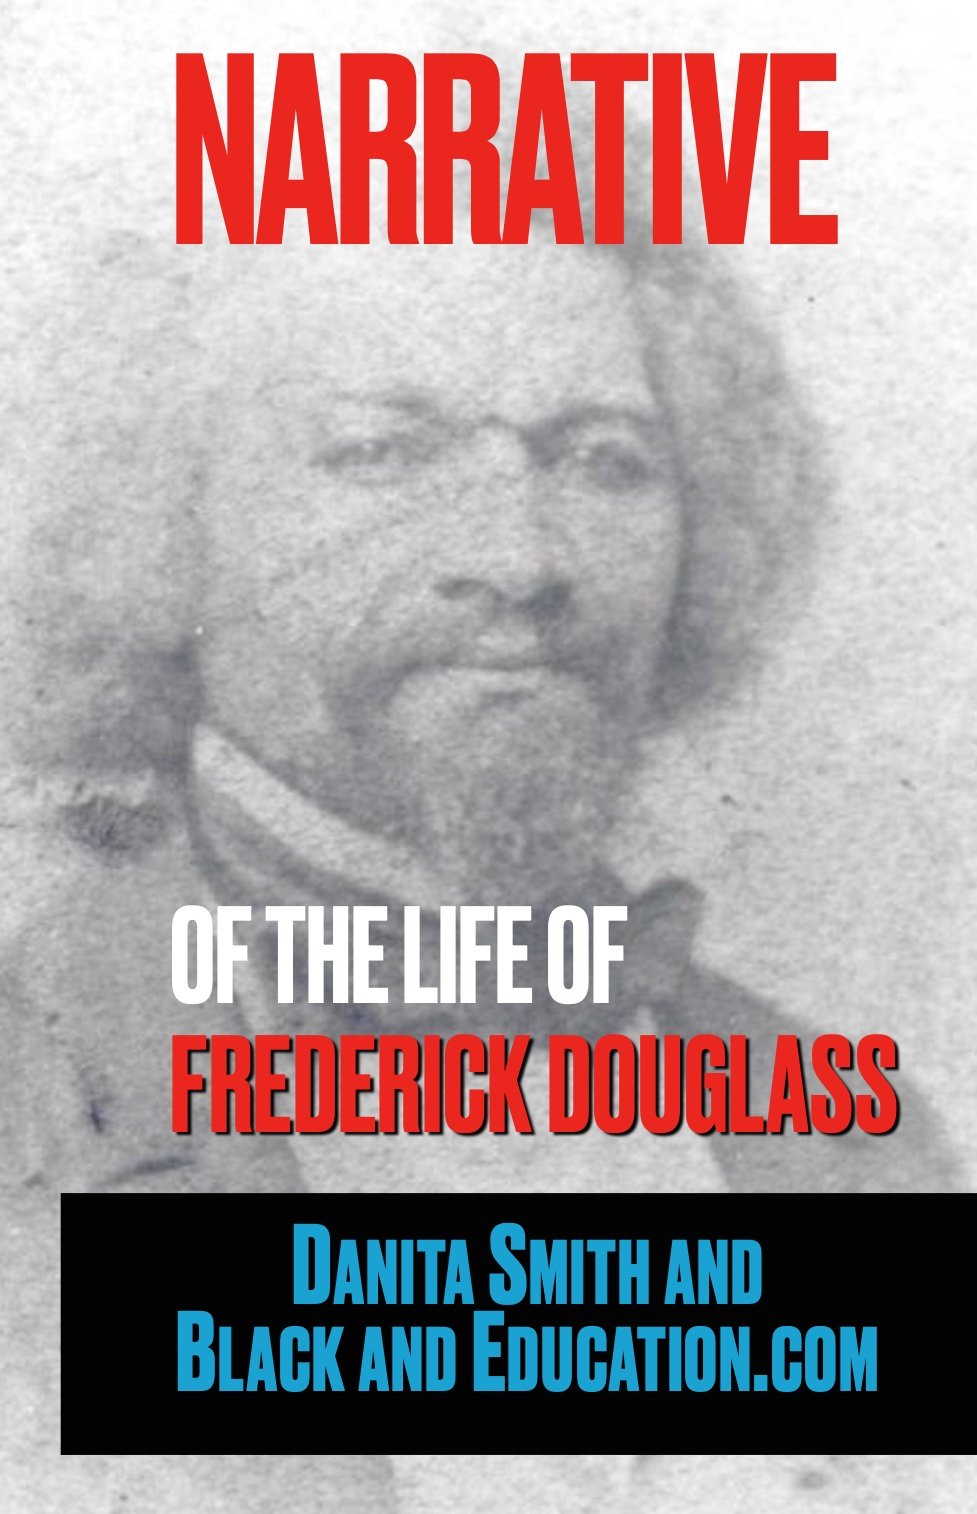 Narrative_of_the_Life_of_Frederick_Douglass_Danita_Smith_BlackandEducation_Image.jpg